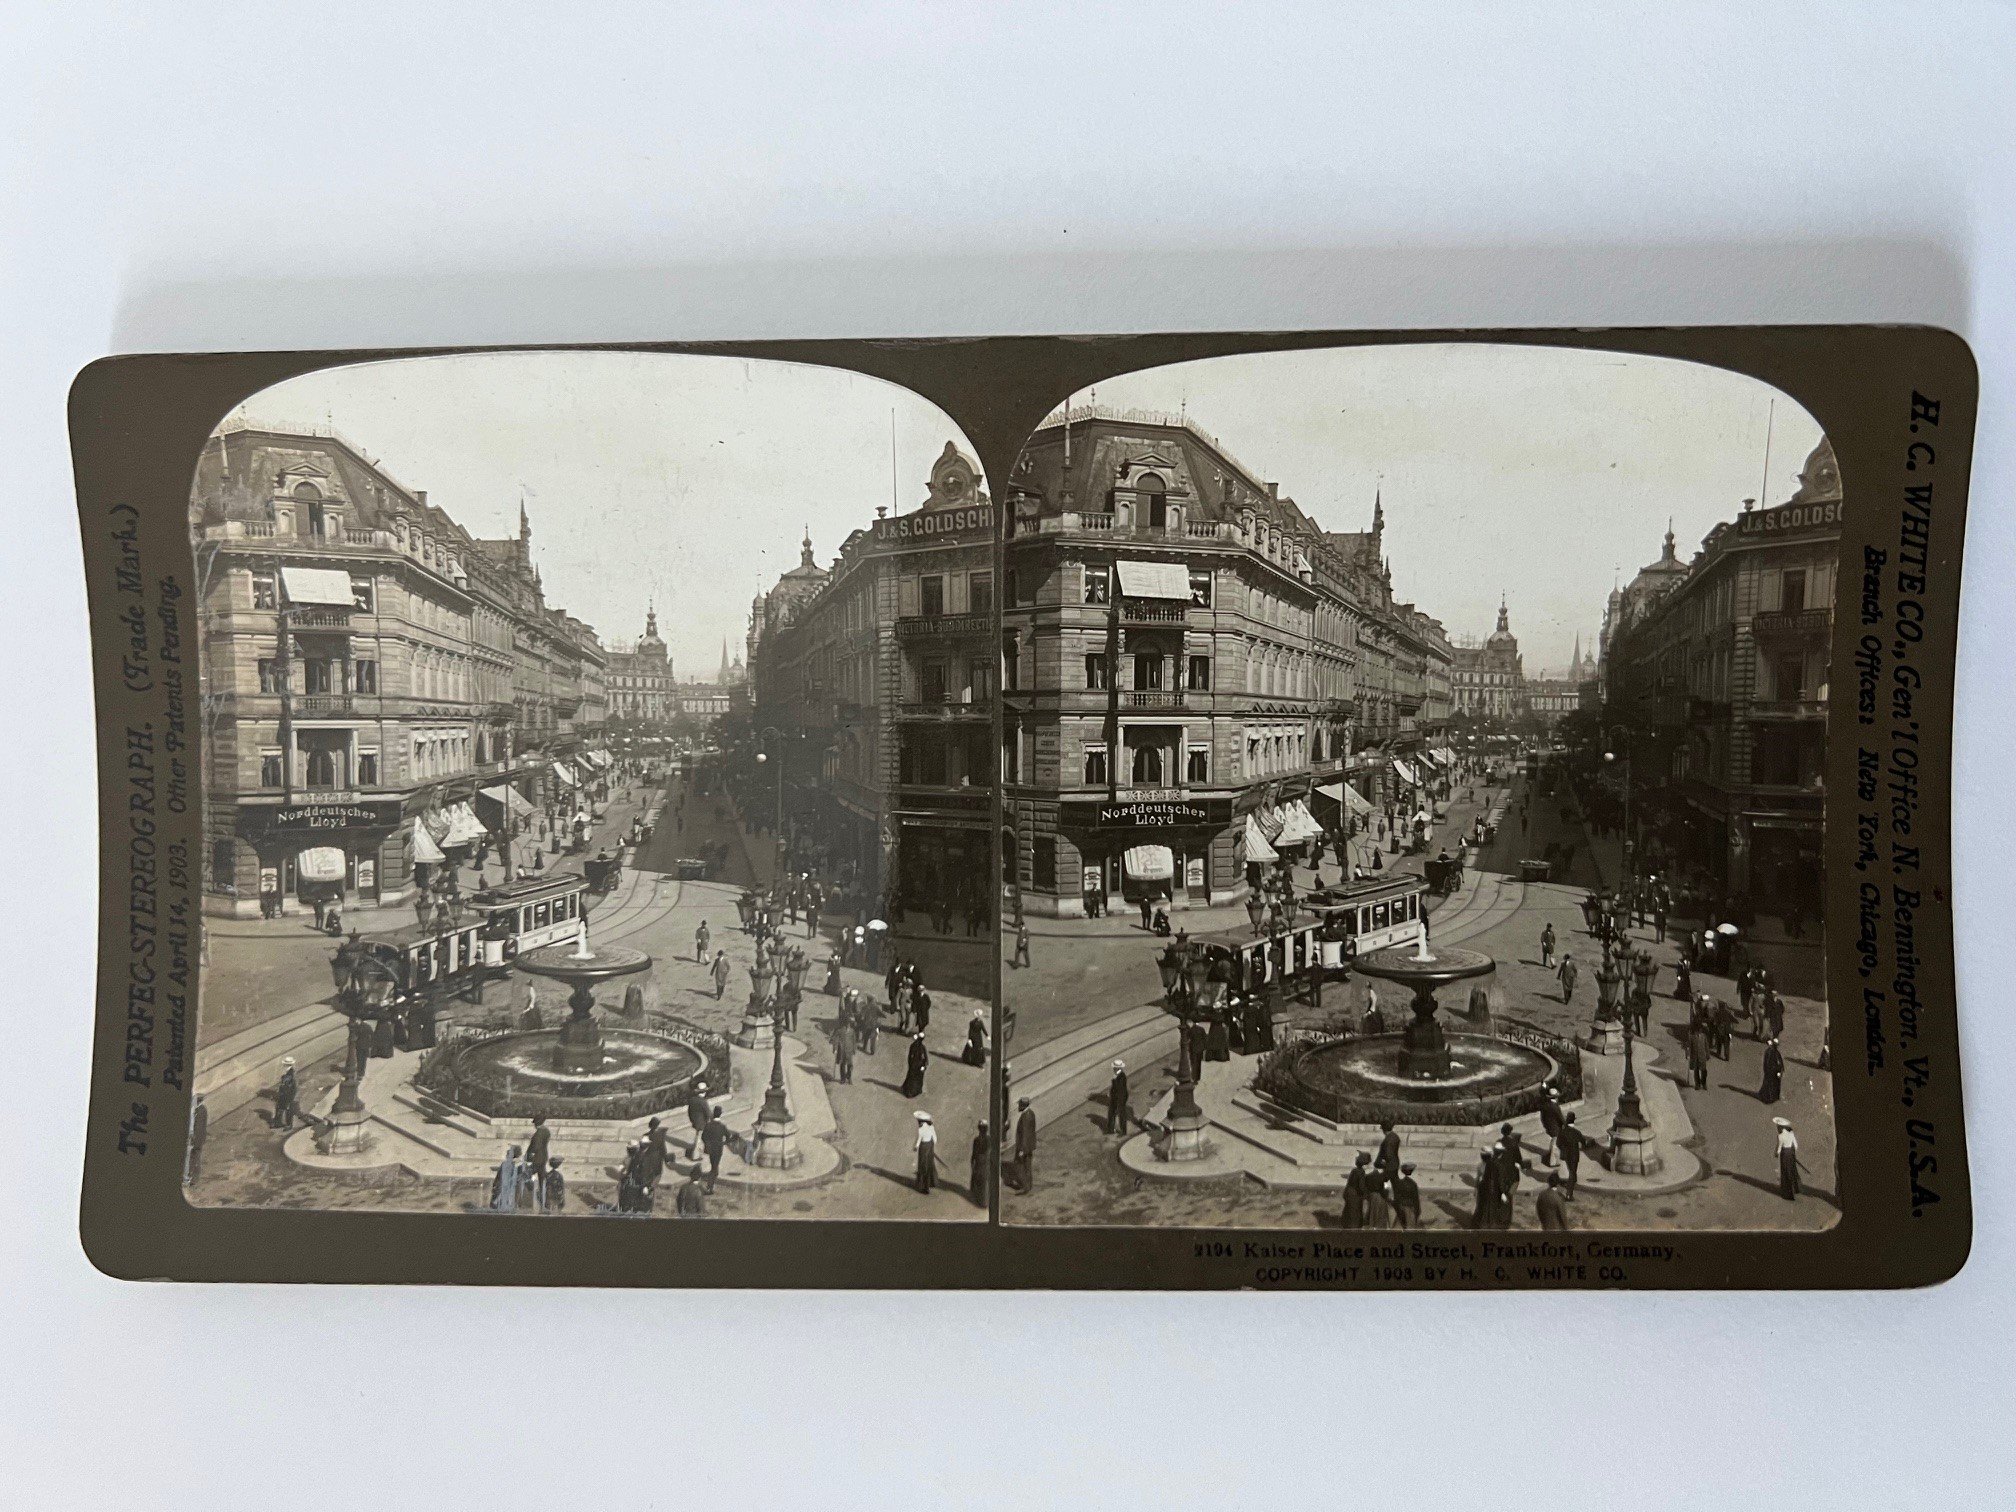 Stereobild, H. C. White, Frankfurt, Nr. 2194, Kaiser Place and Street, ca. 1910. (Taunus-Rhein-Main - Regionalgeschichtliche Sammlung Dr. Stefan Naas CC BY-NC-SA)